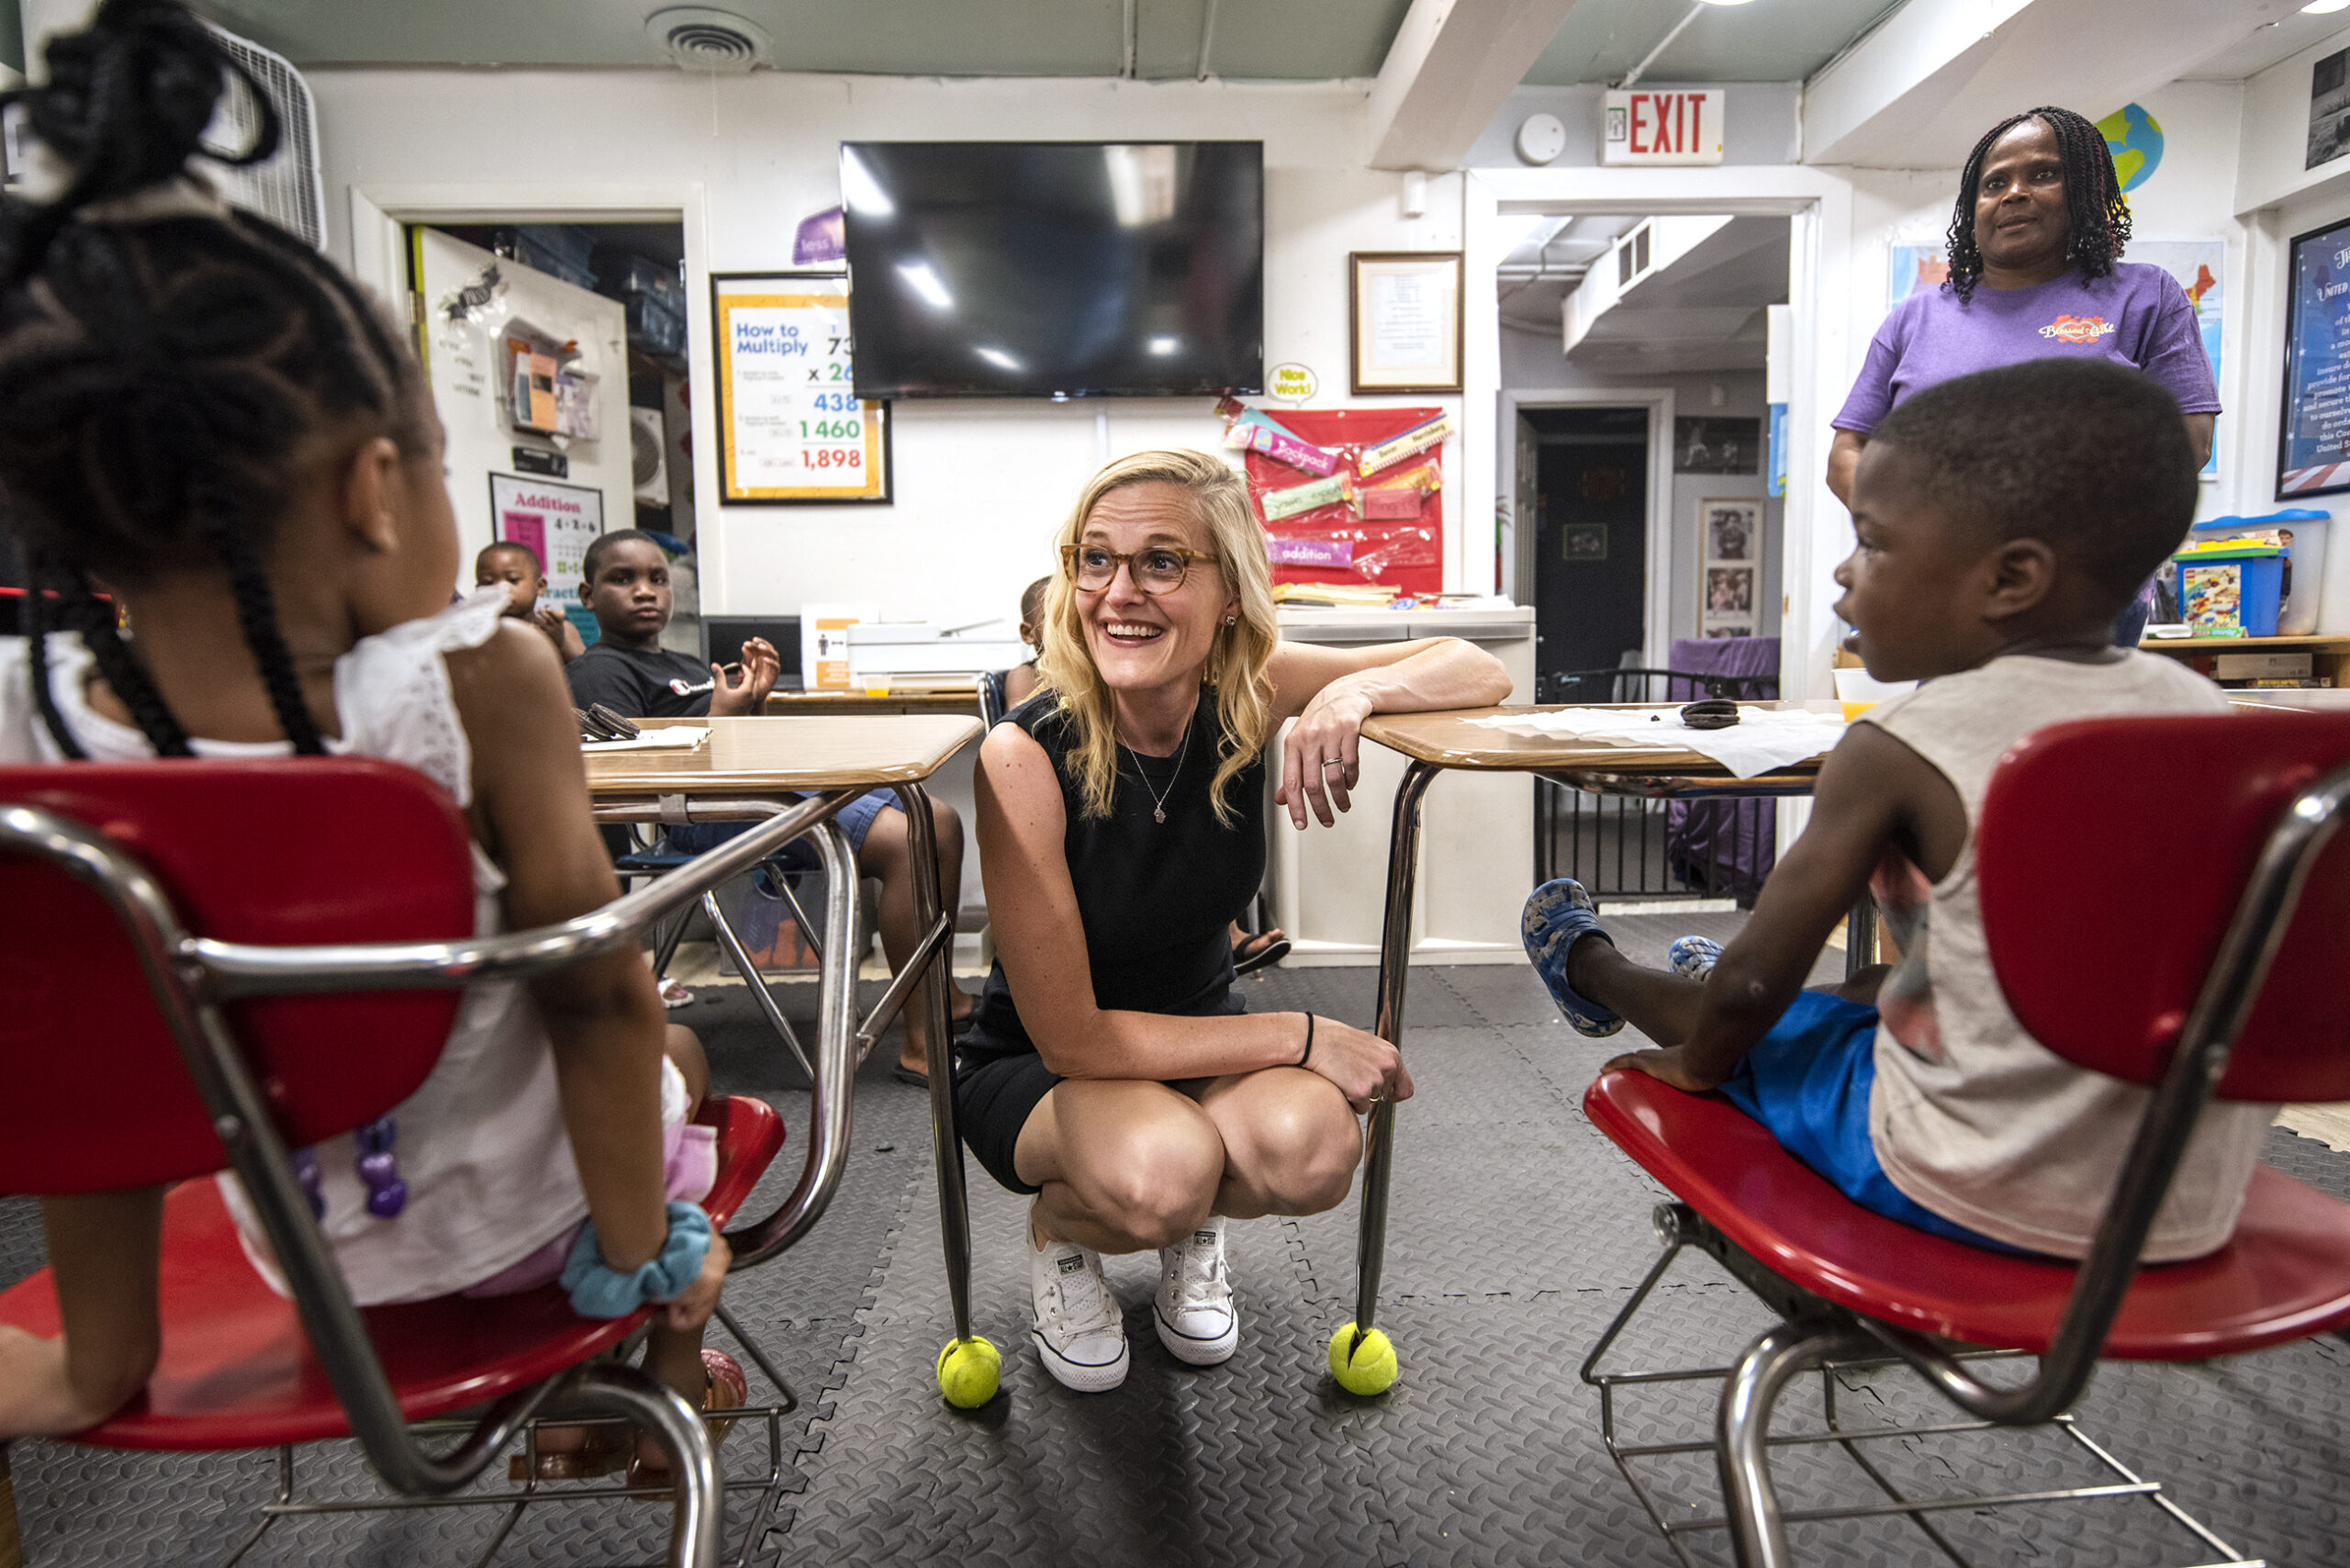 Sarah Godlewski smiles as she speaks to young children sitting in desks.